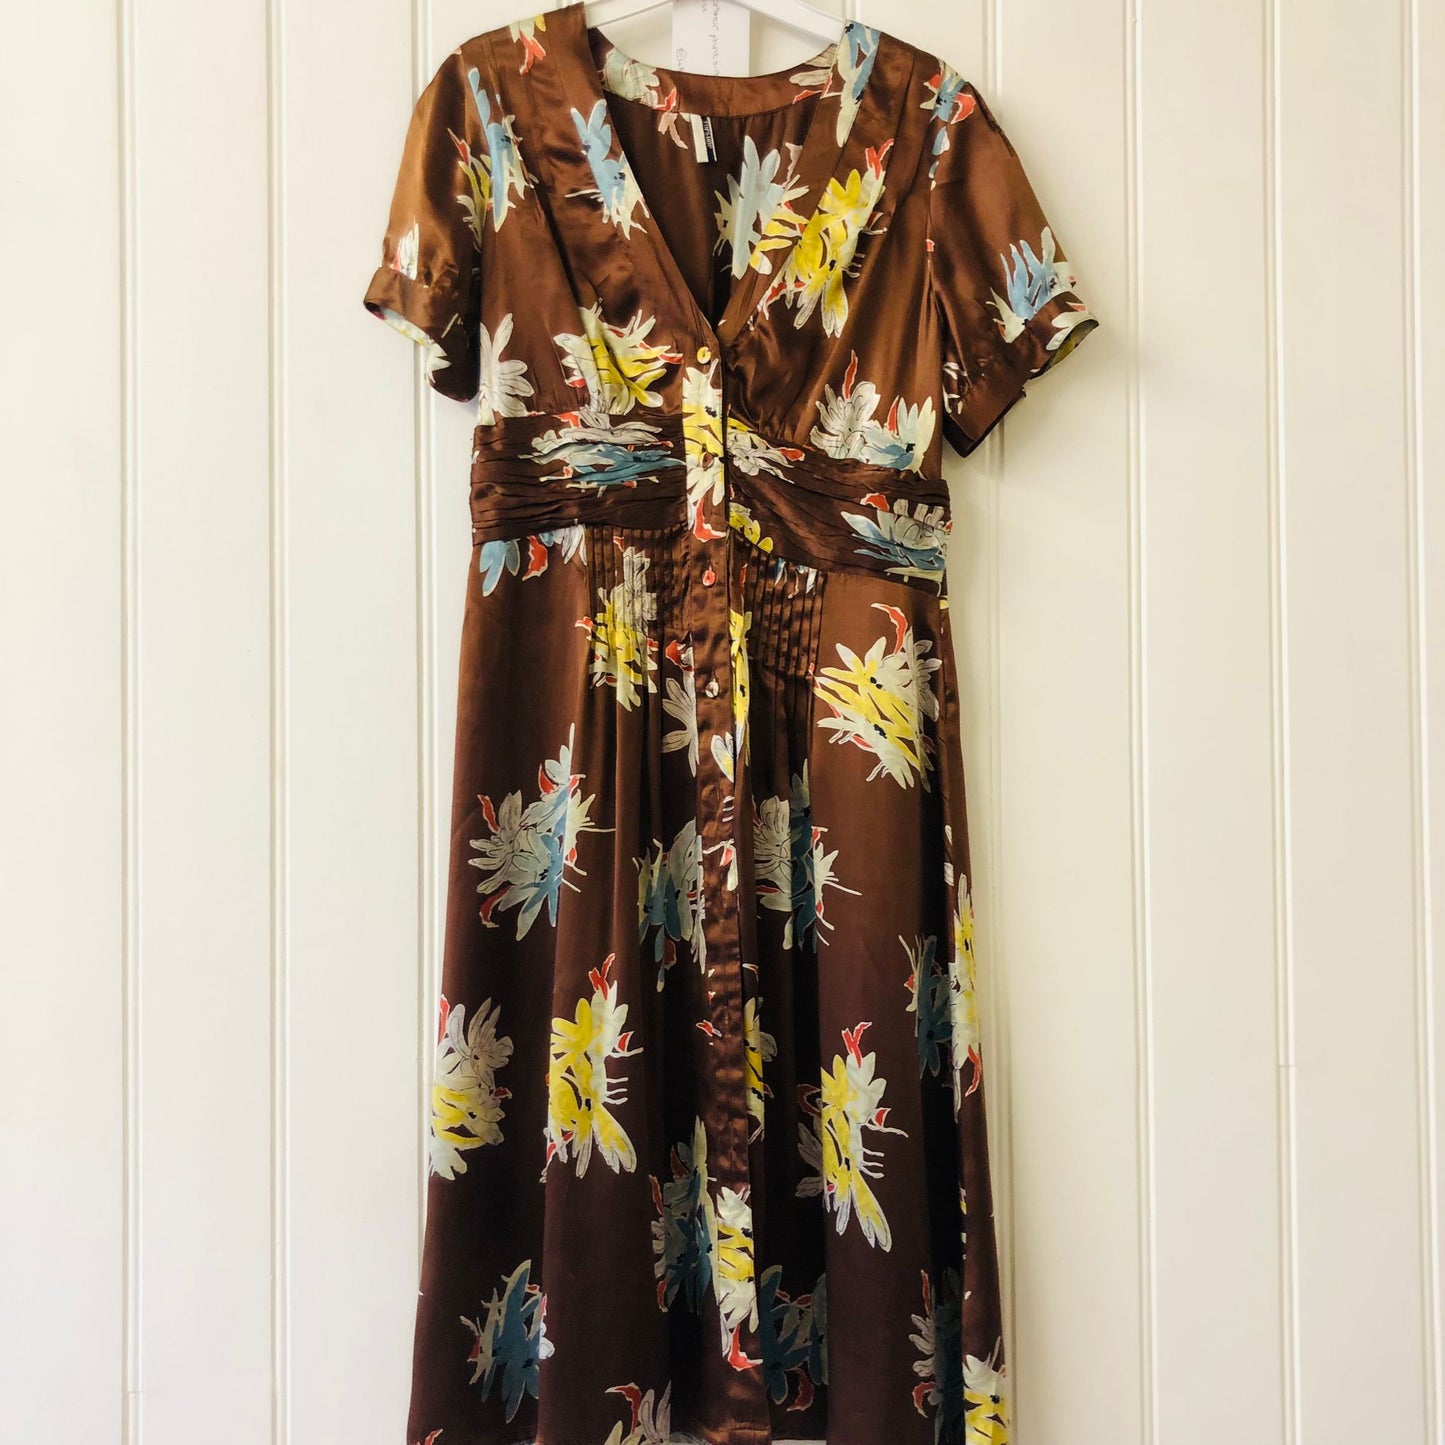 Topshop brown floral print dress 14